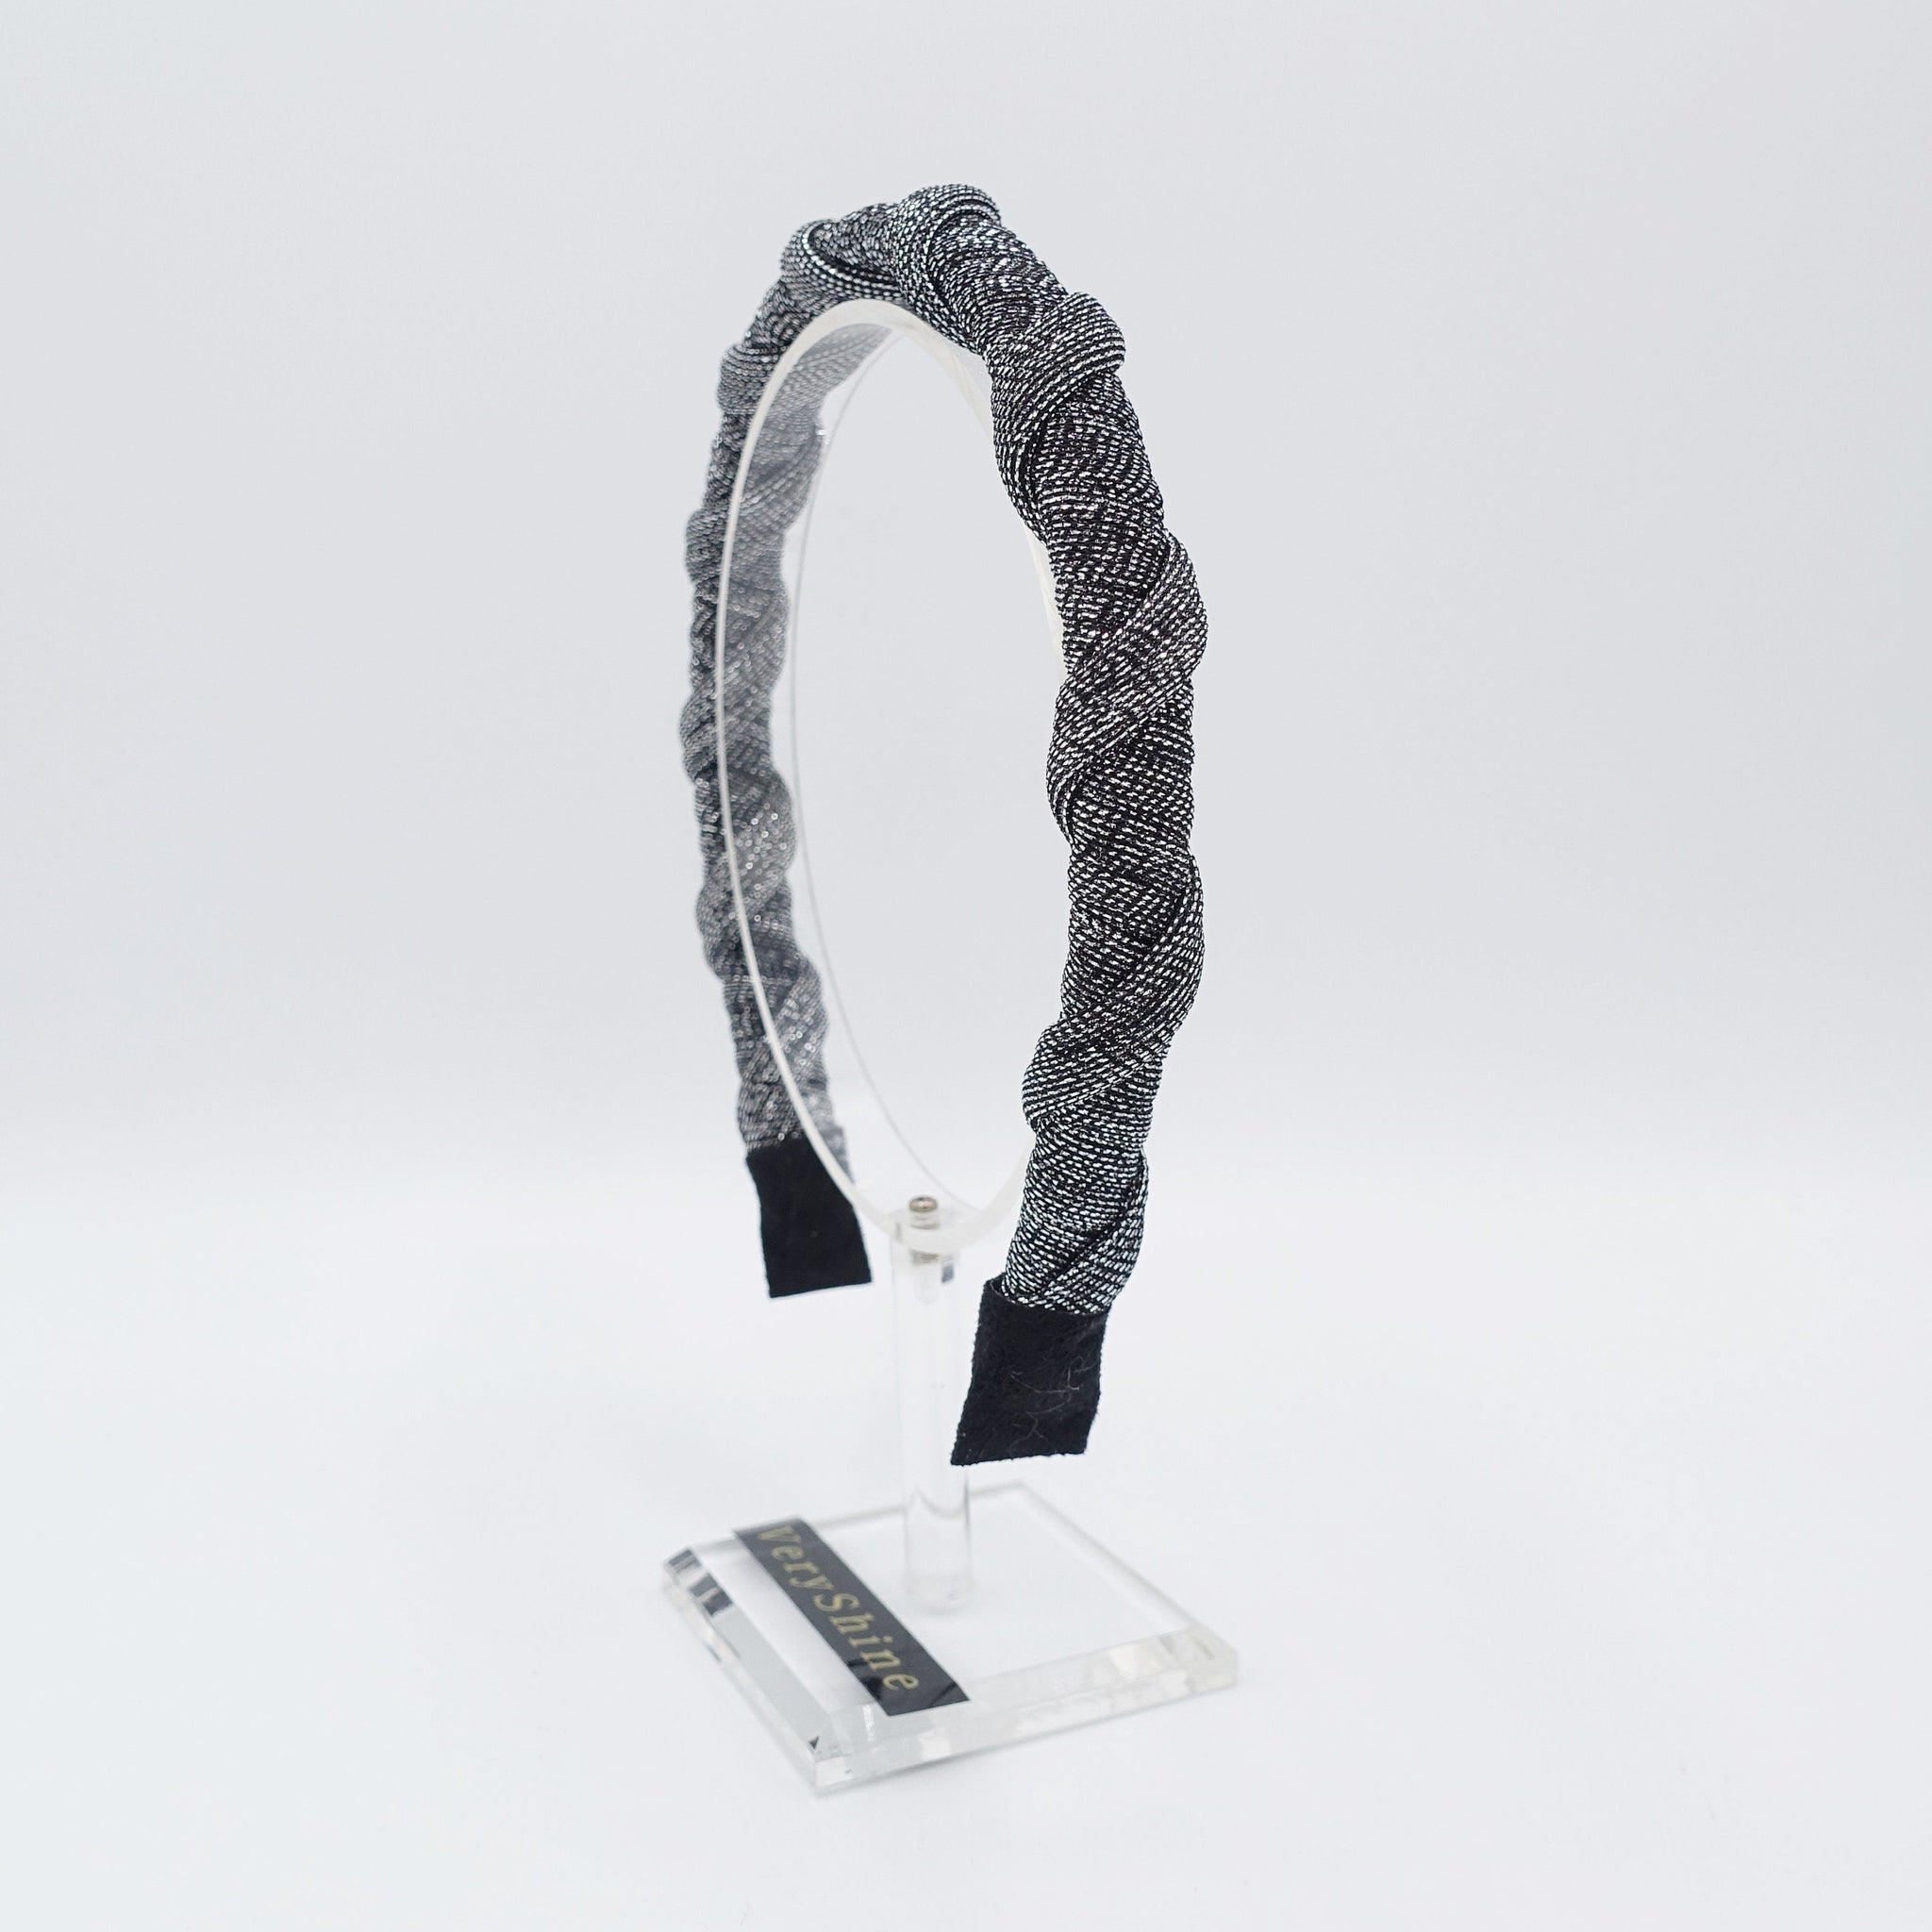 VeryShine lame wrap thin headband glittering hair accessory for women